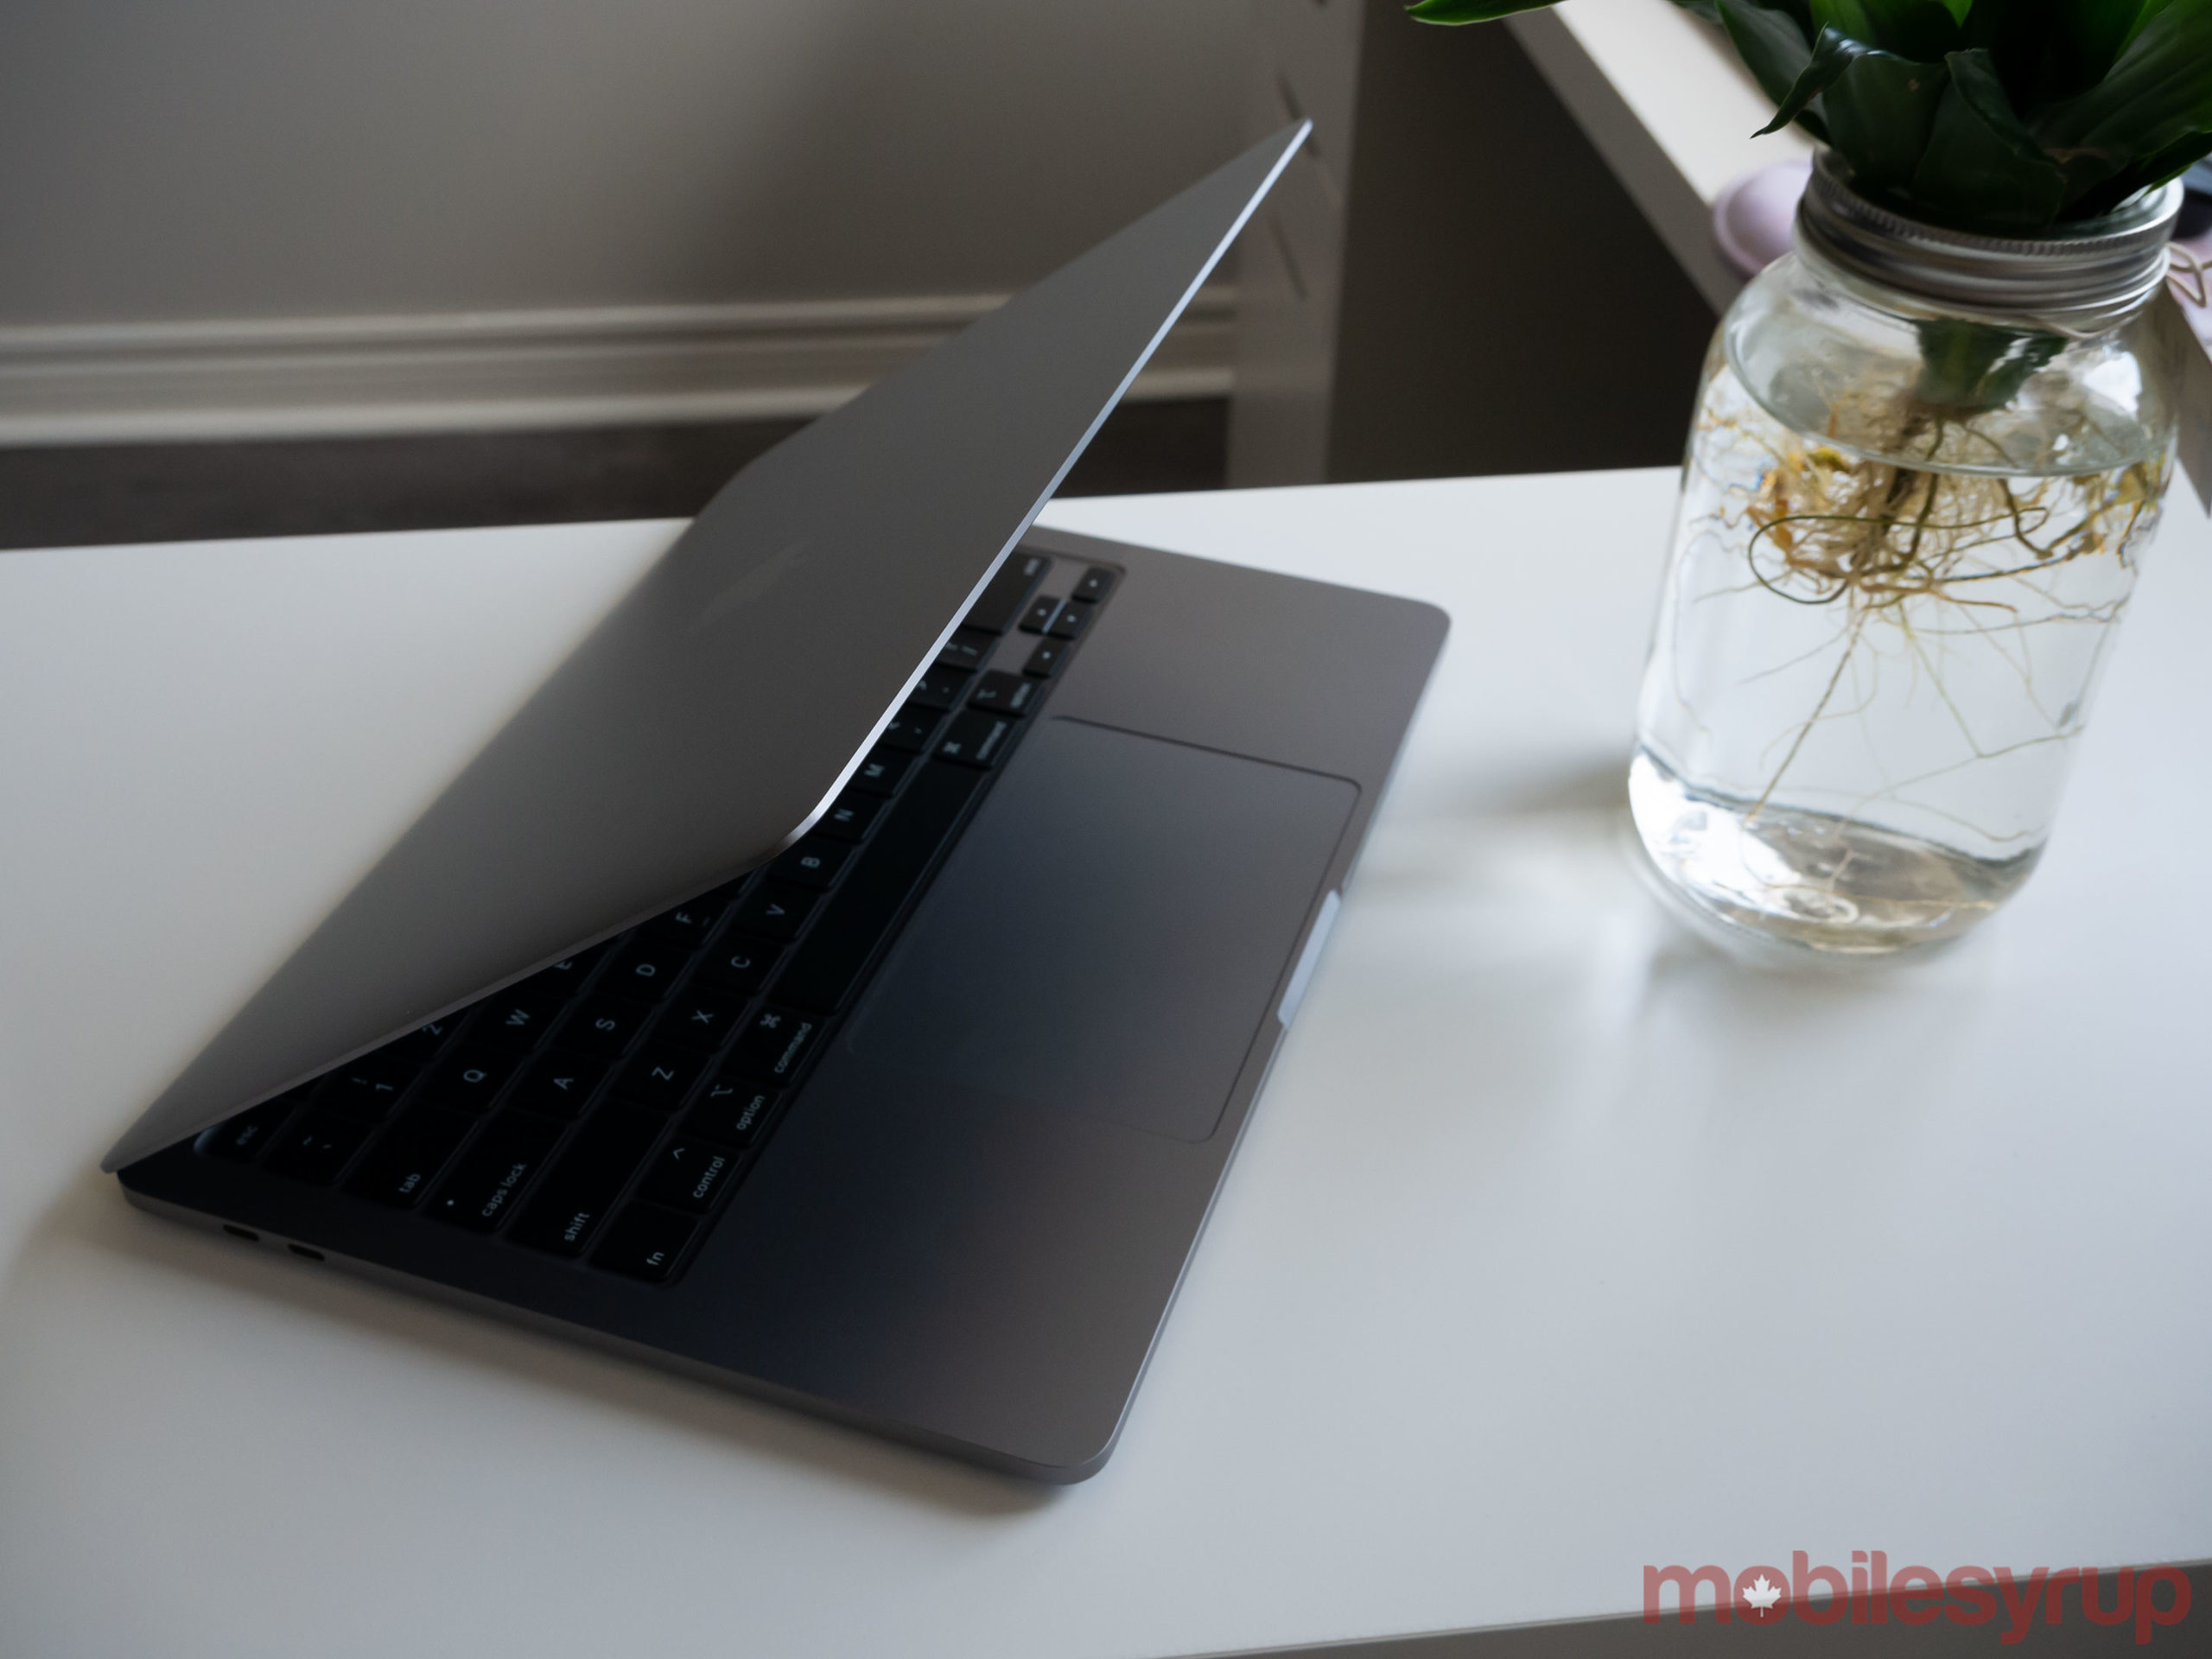 13-inch MacBook Pro (2020) beside plant